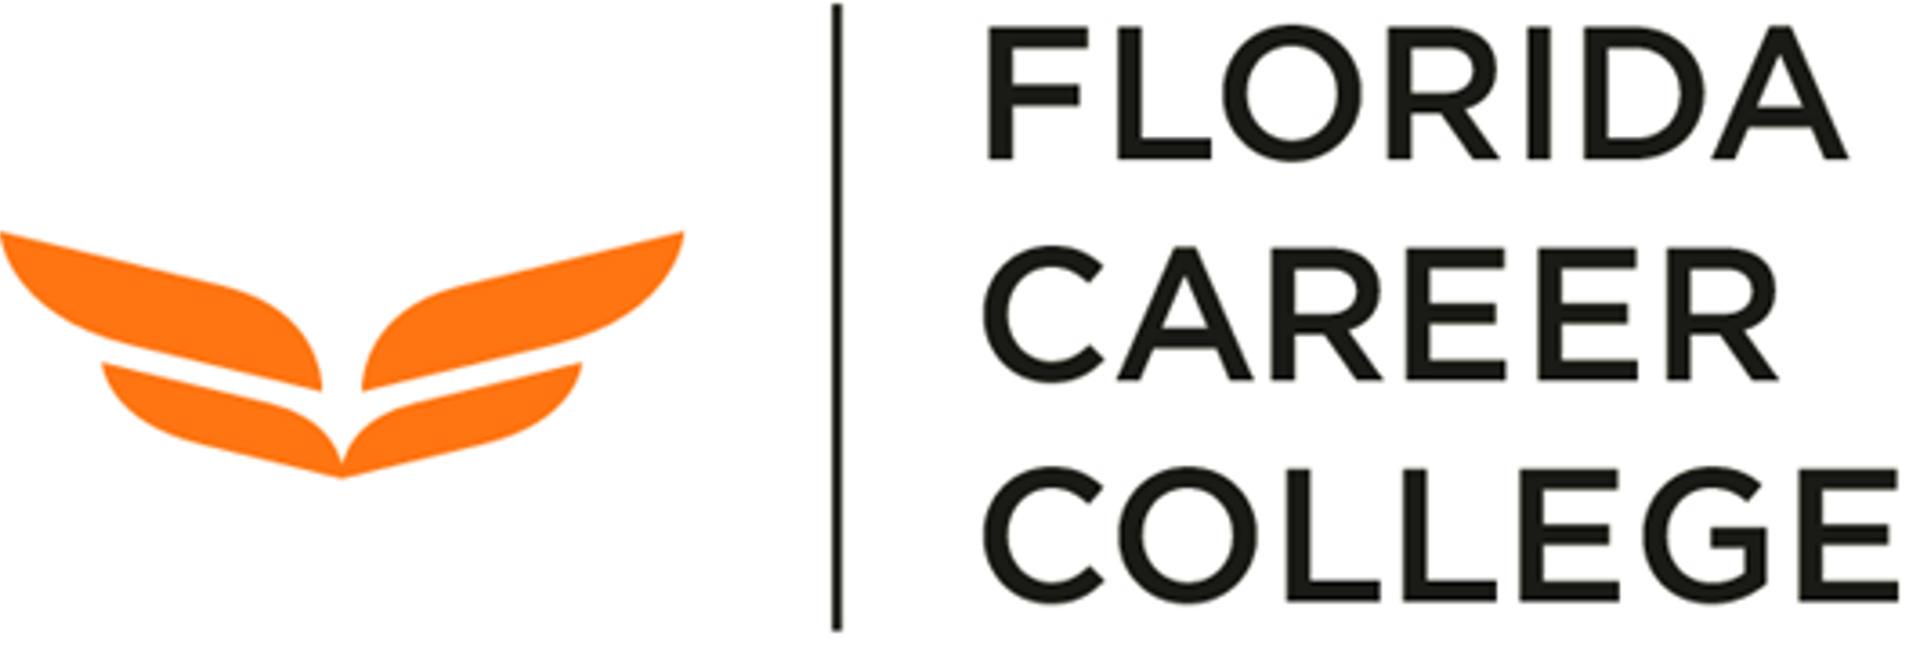 Florida Career College Logo2017